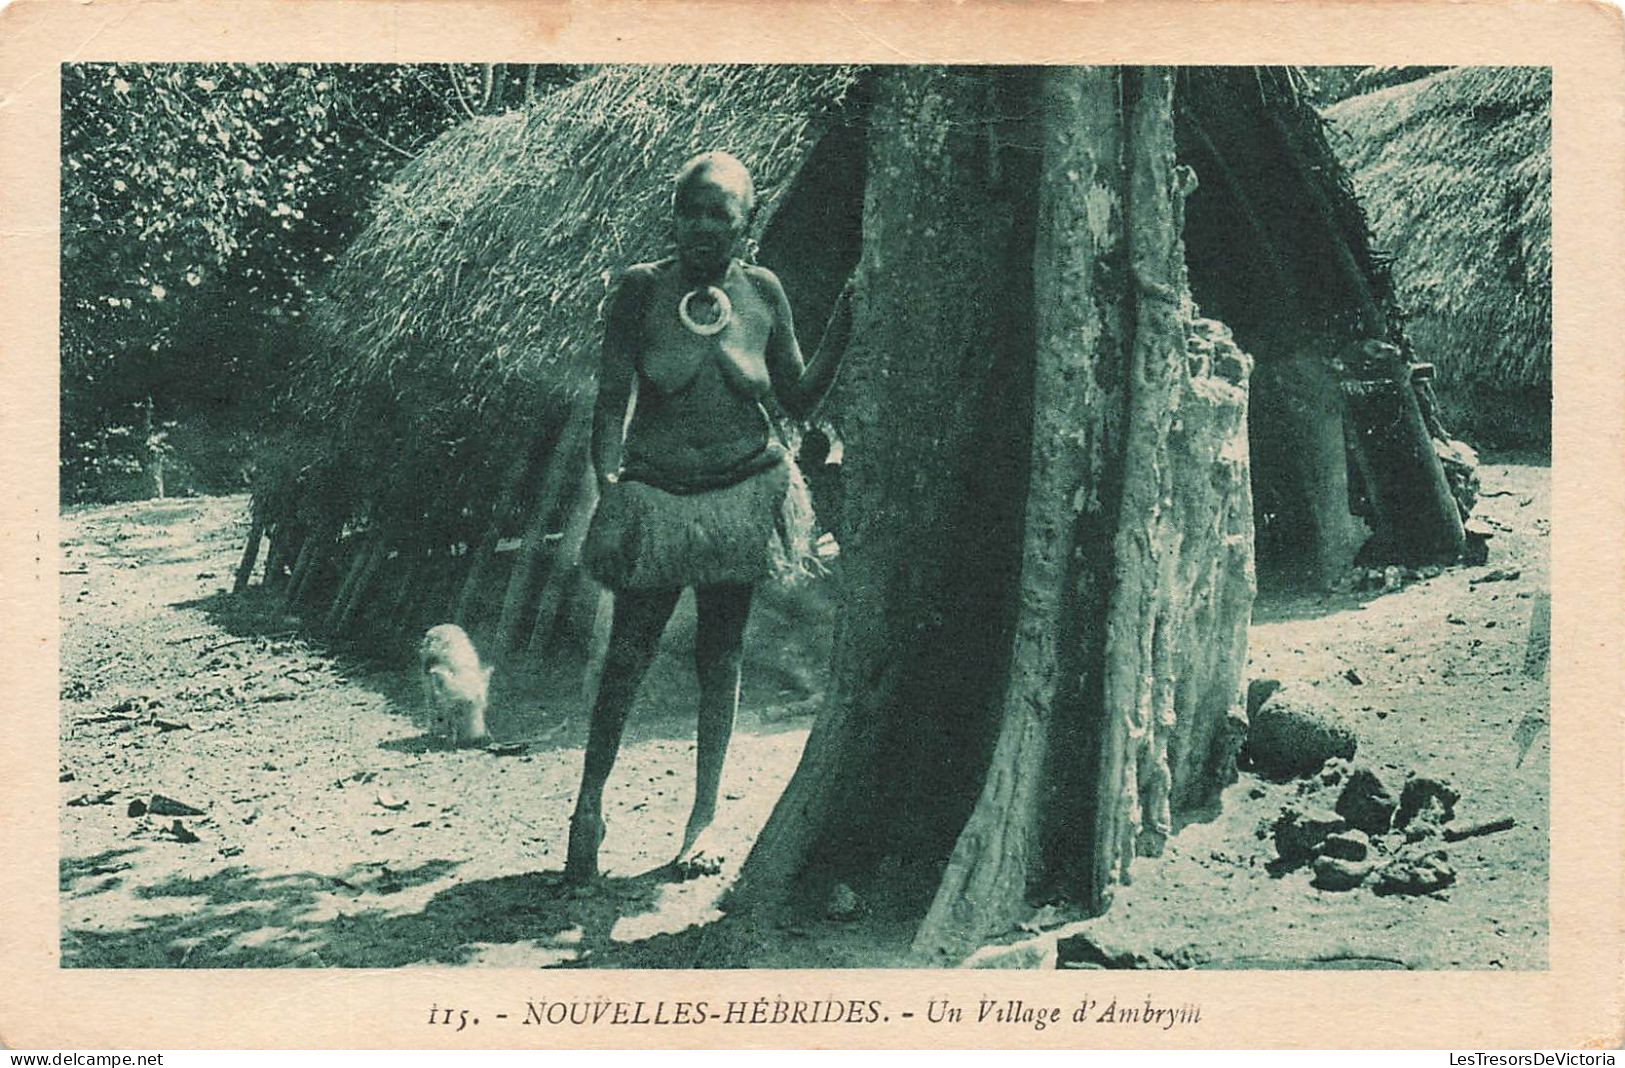 VANUANTU - Nouvelles Hébrides - Un Village D'Ambruyiii - Femme - Carte Postale Ancienne - Vanuatu